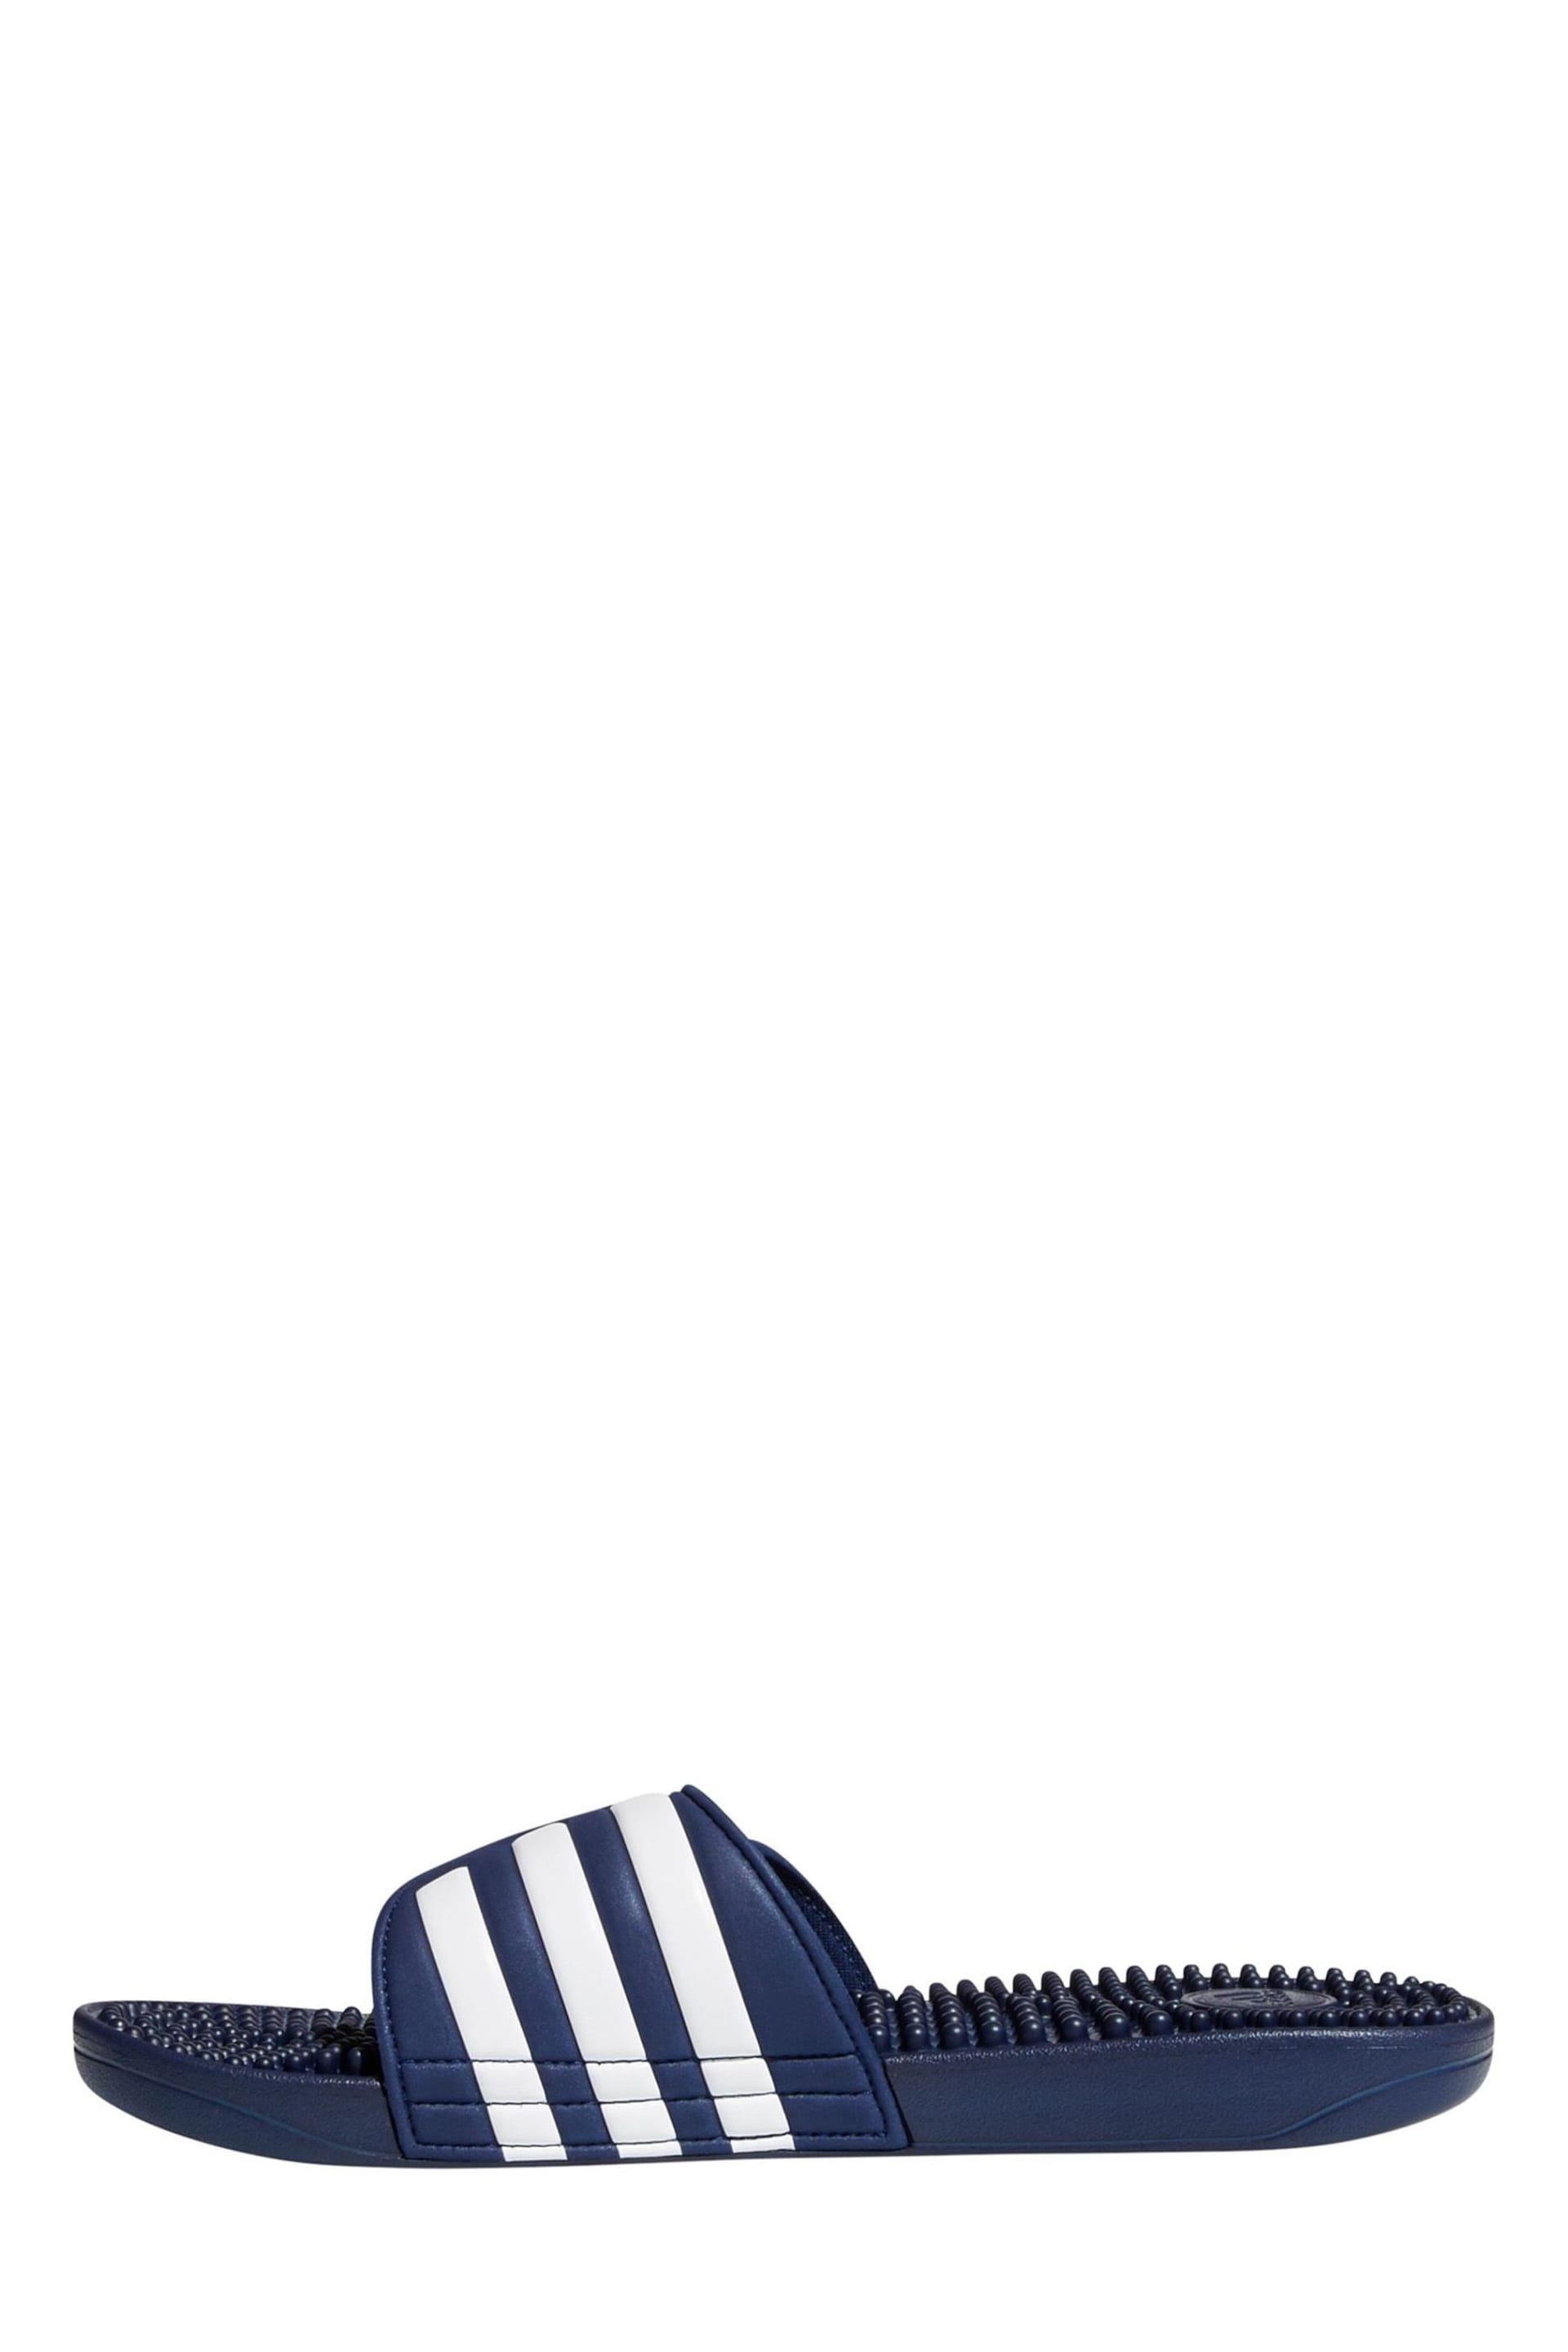 adidas Blue Sportswear Adissage Slides - Image 3 of 9